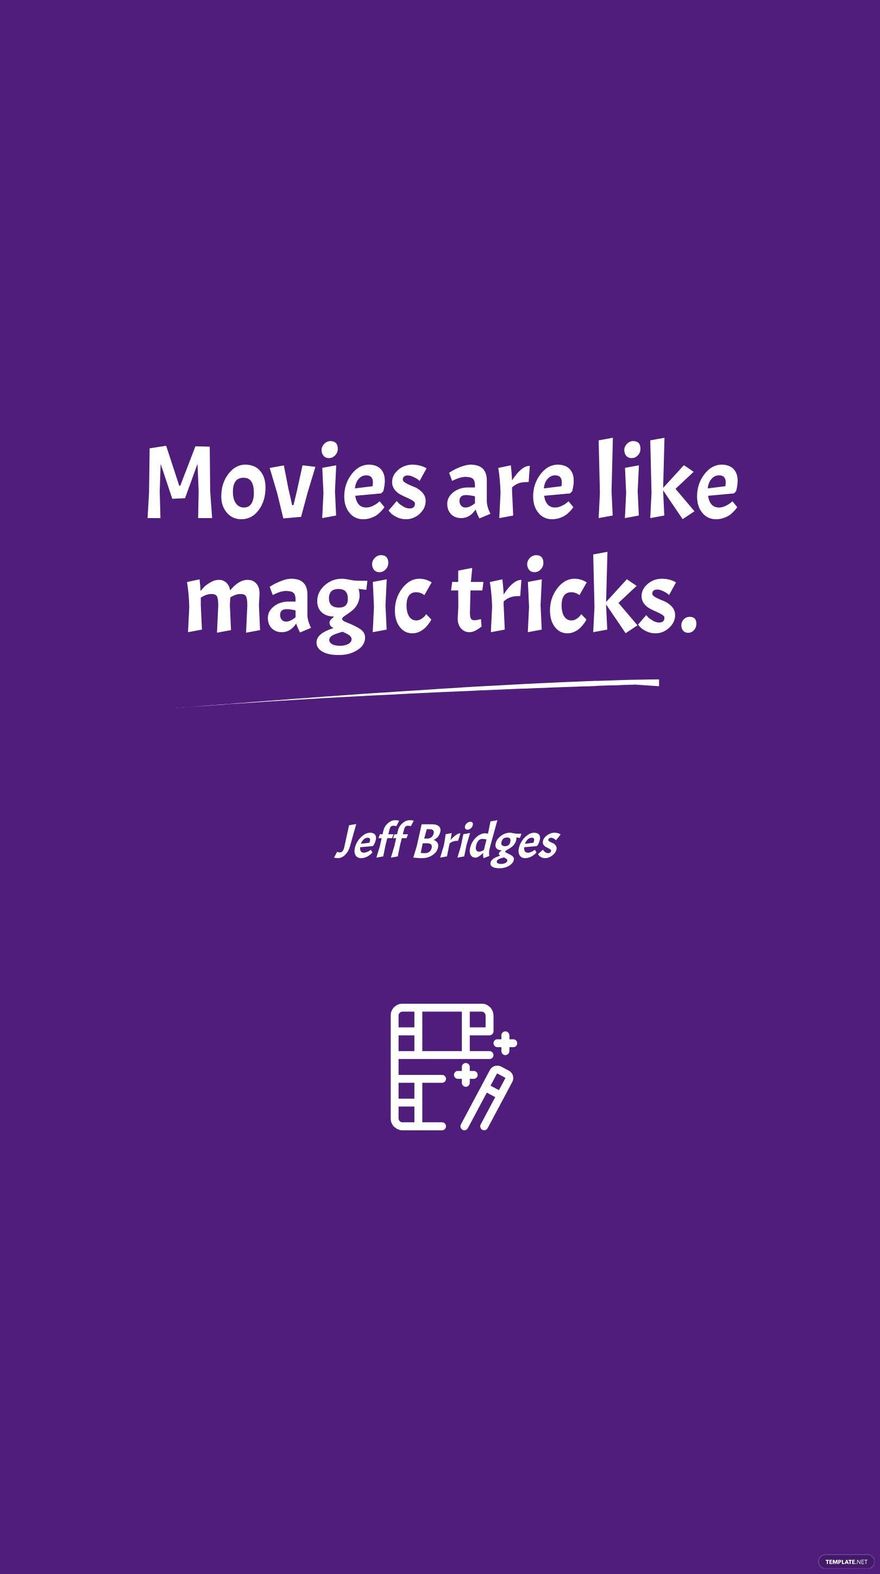 Free Jeff Bridges - Movies are like magic tricks. in JPG